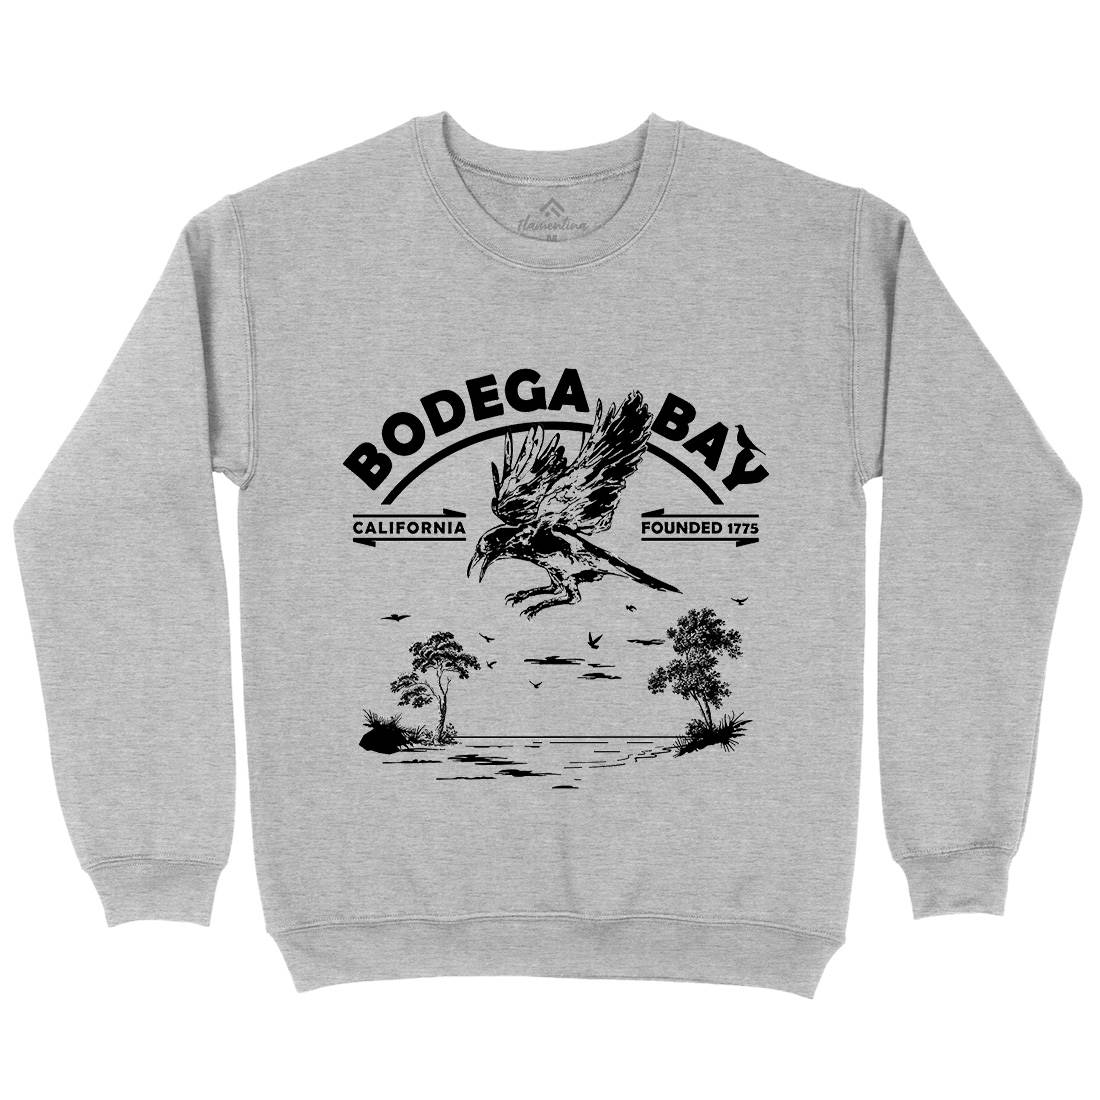 Bodega Bay Mens Crew Neck Sweatshirt Horror D310